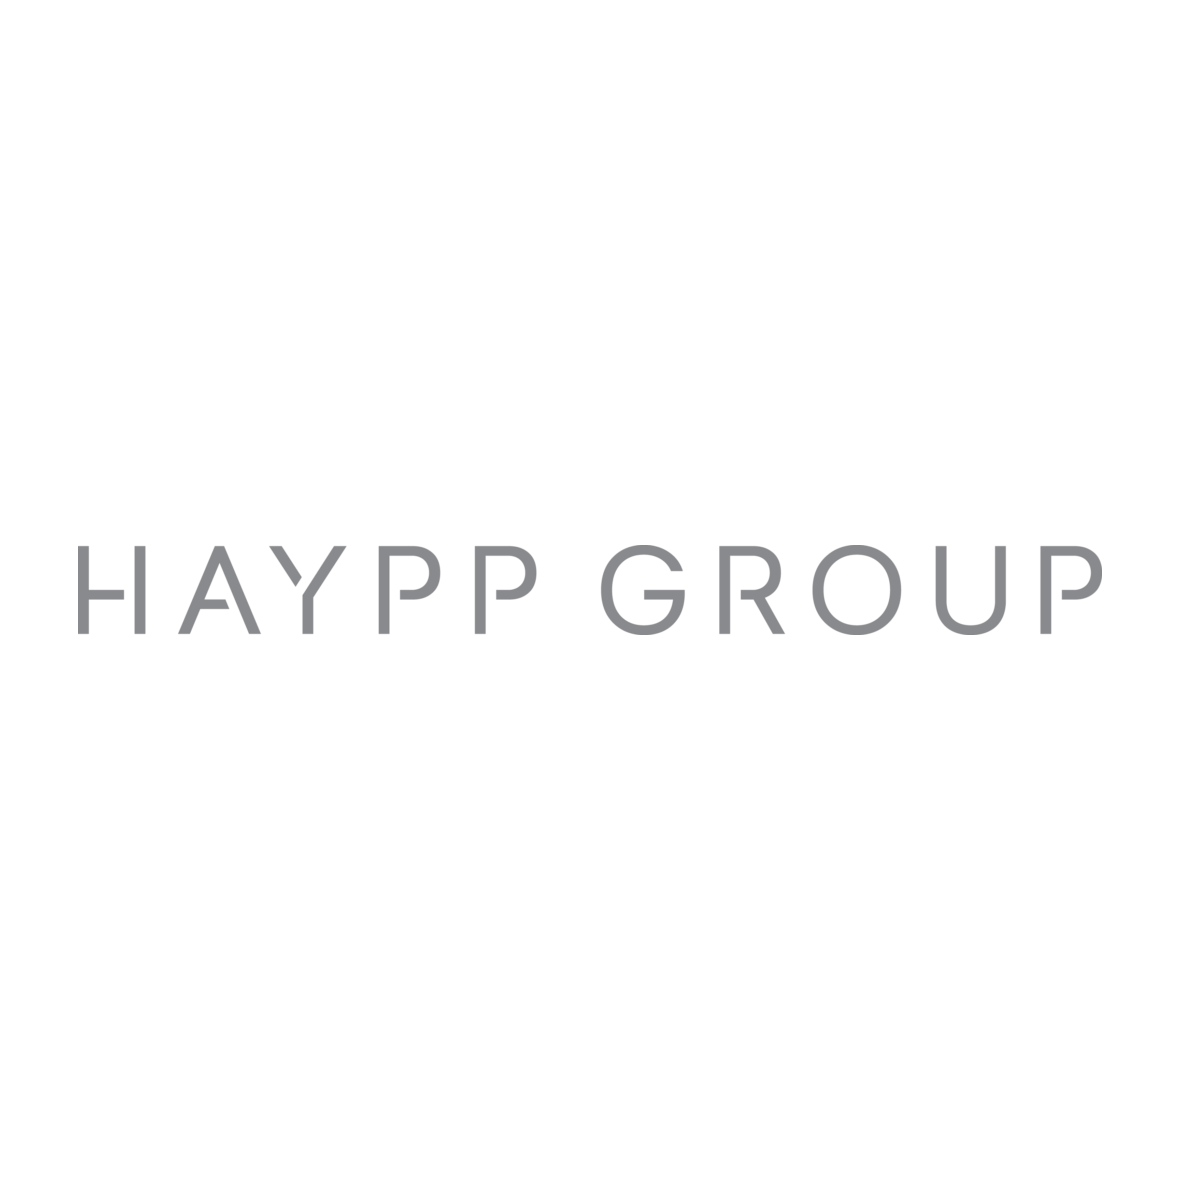 Haypp Group Logo